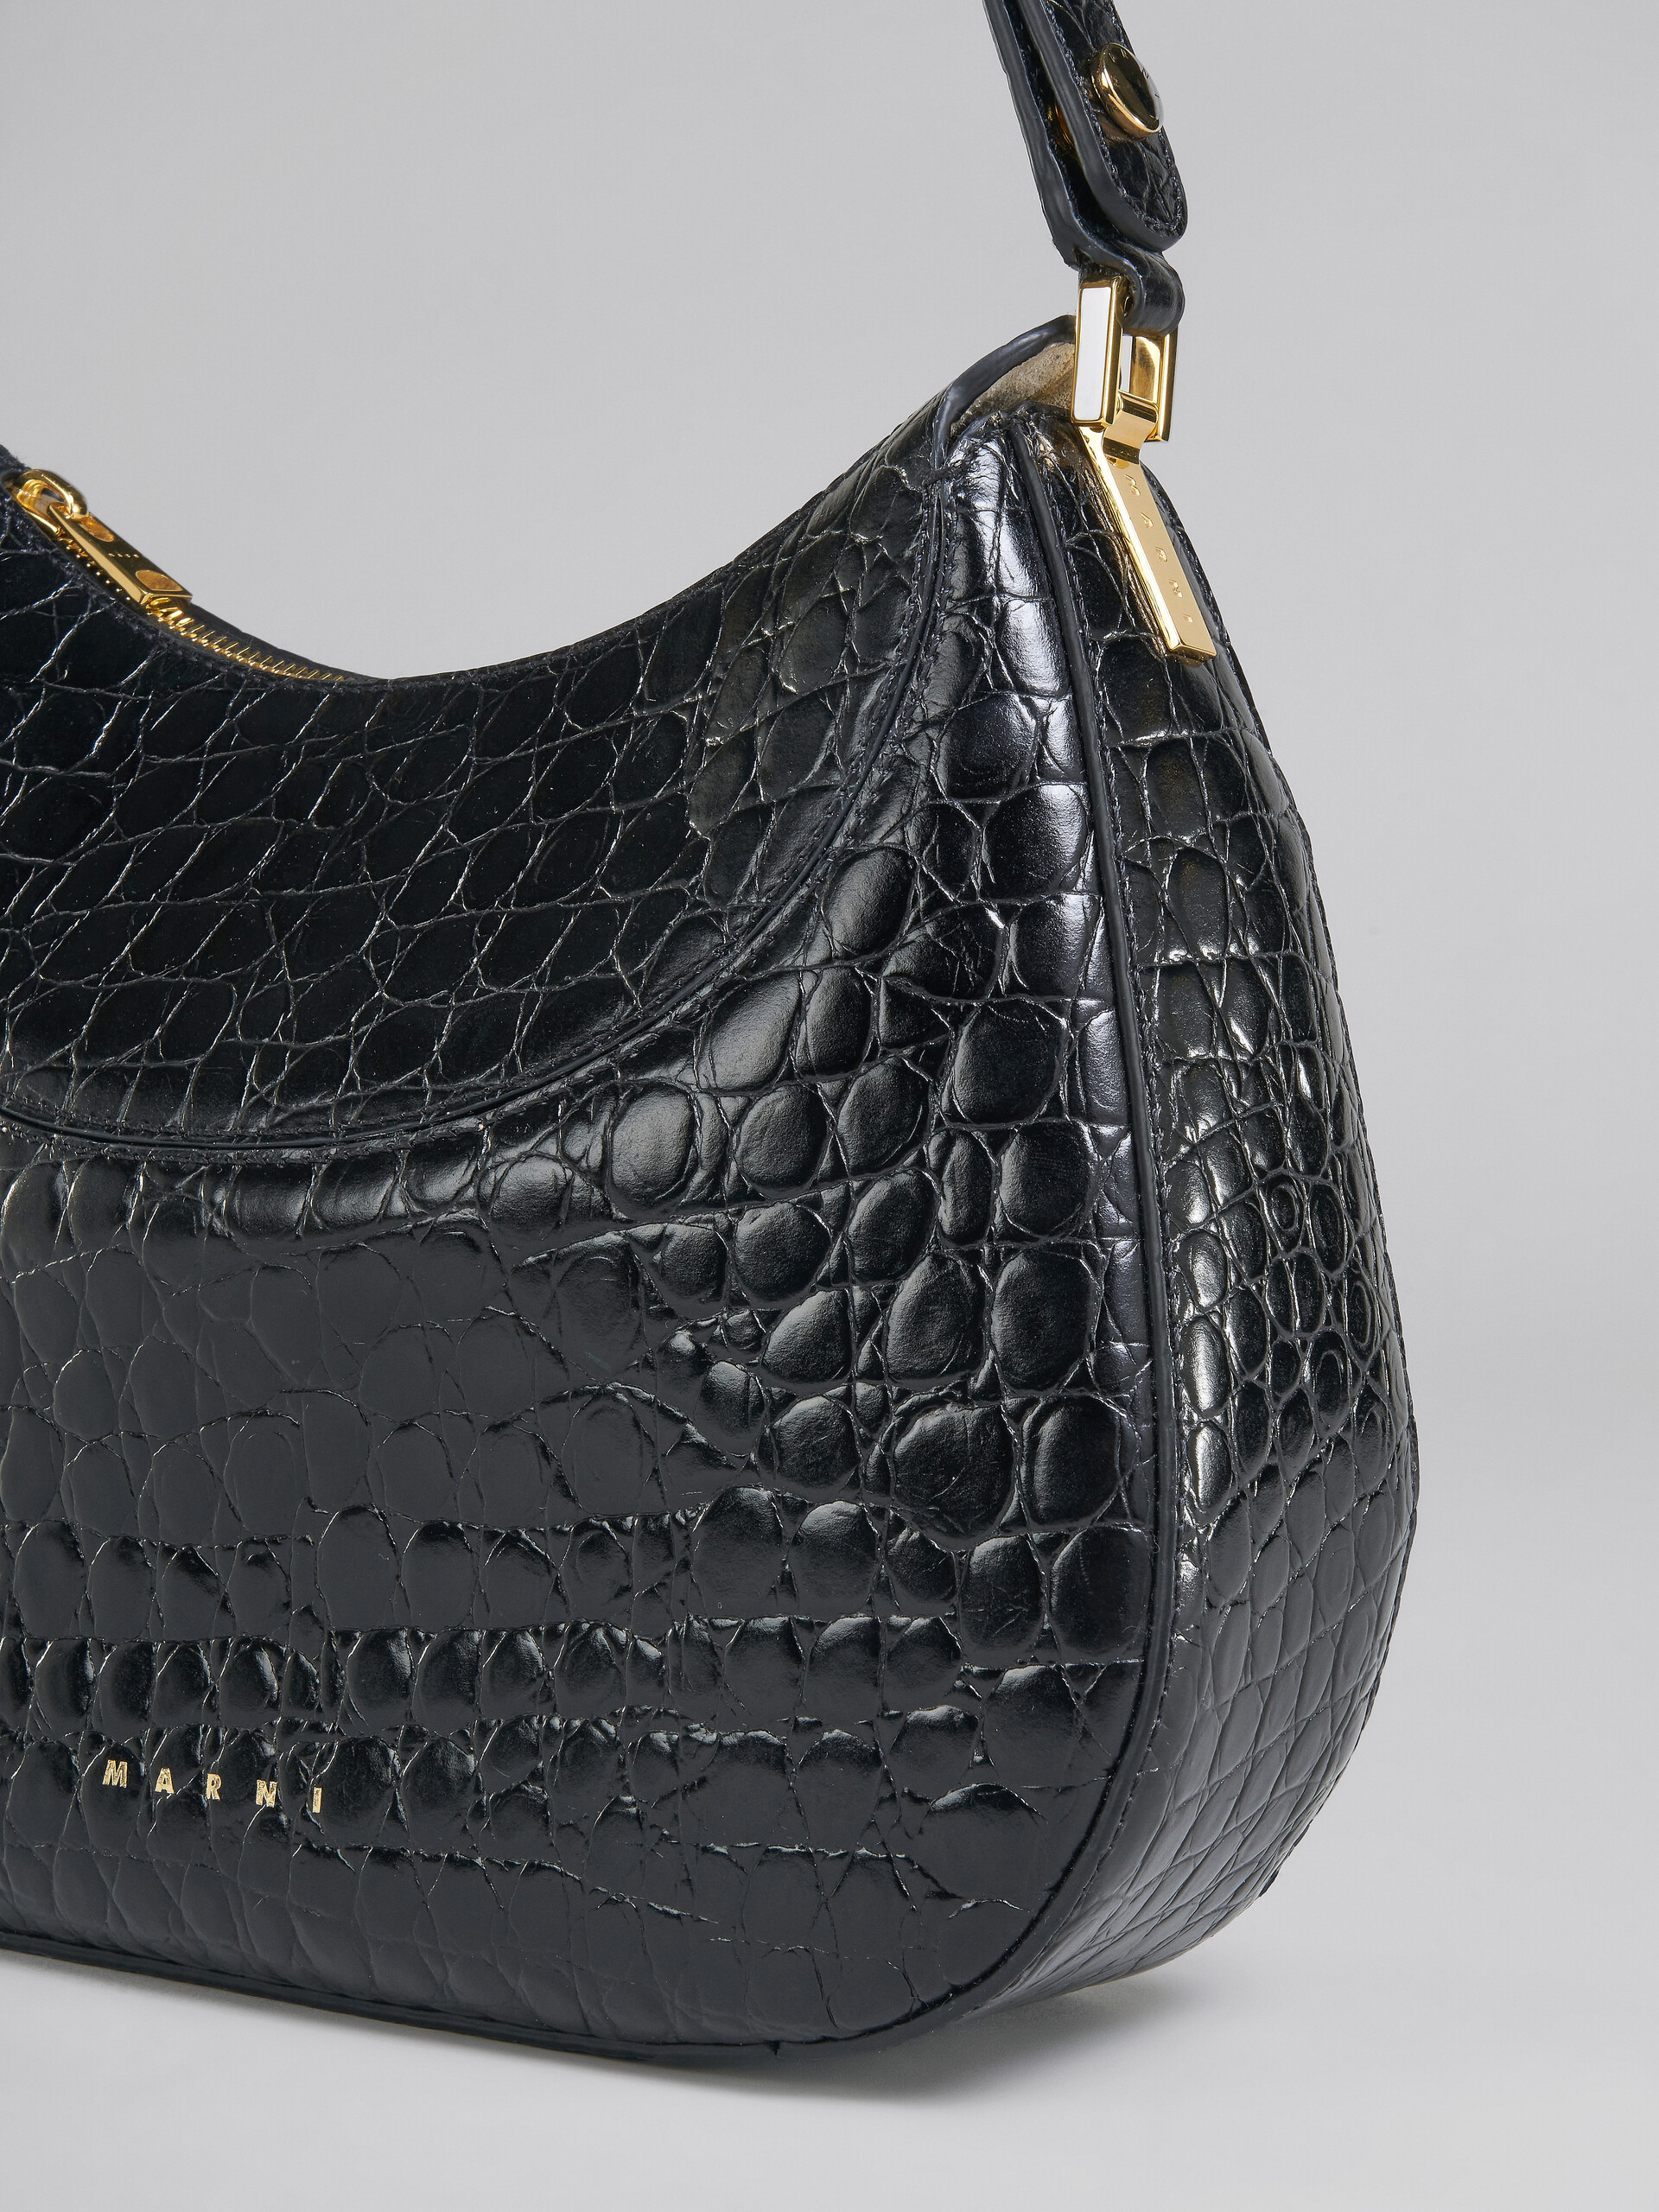 Milano Small Bag in black croco print leather - Handbag - Image 5